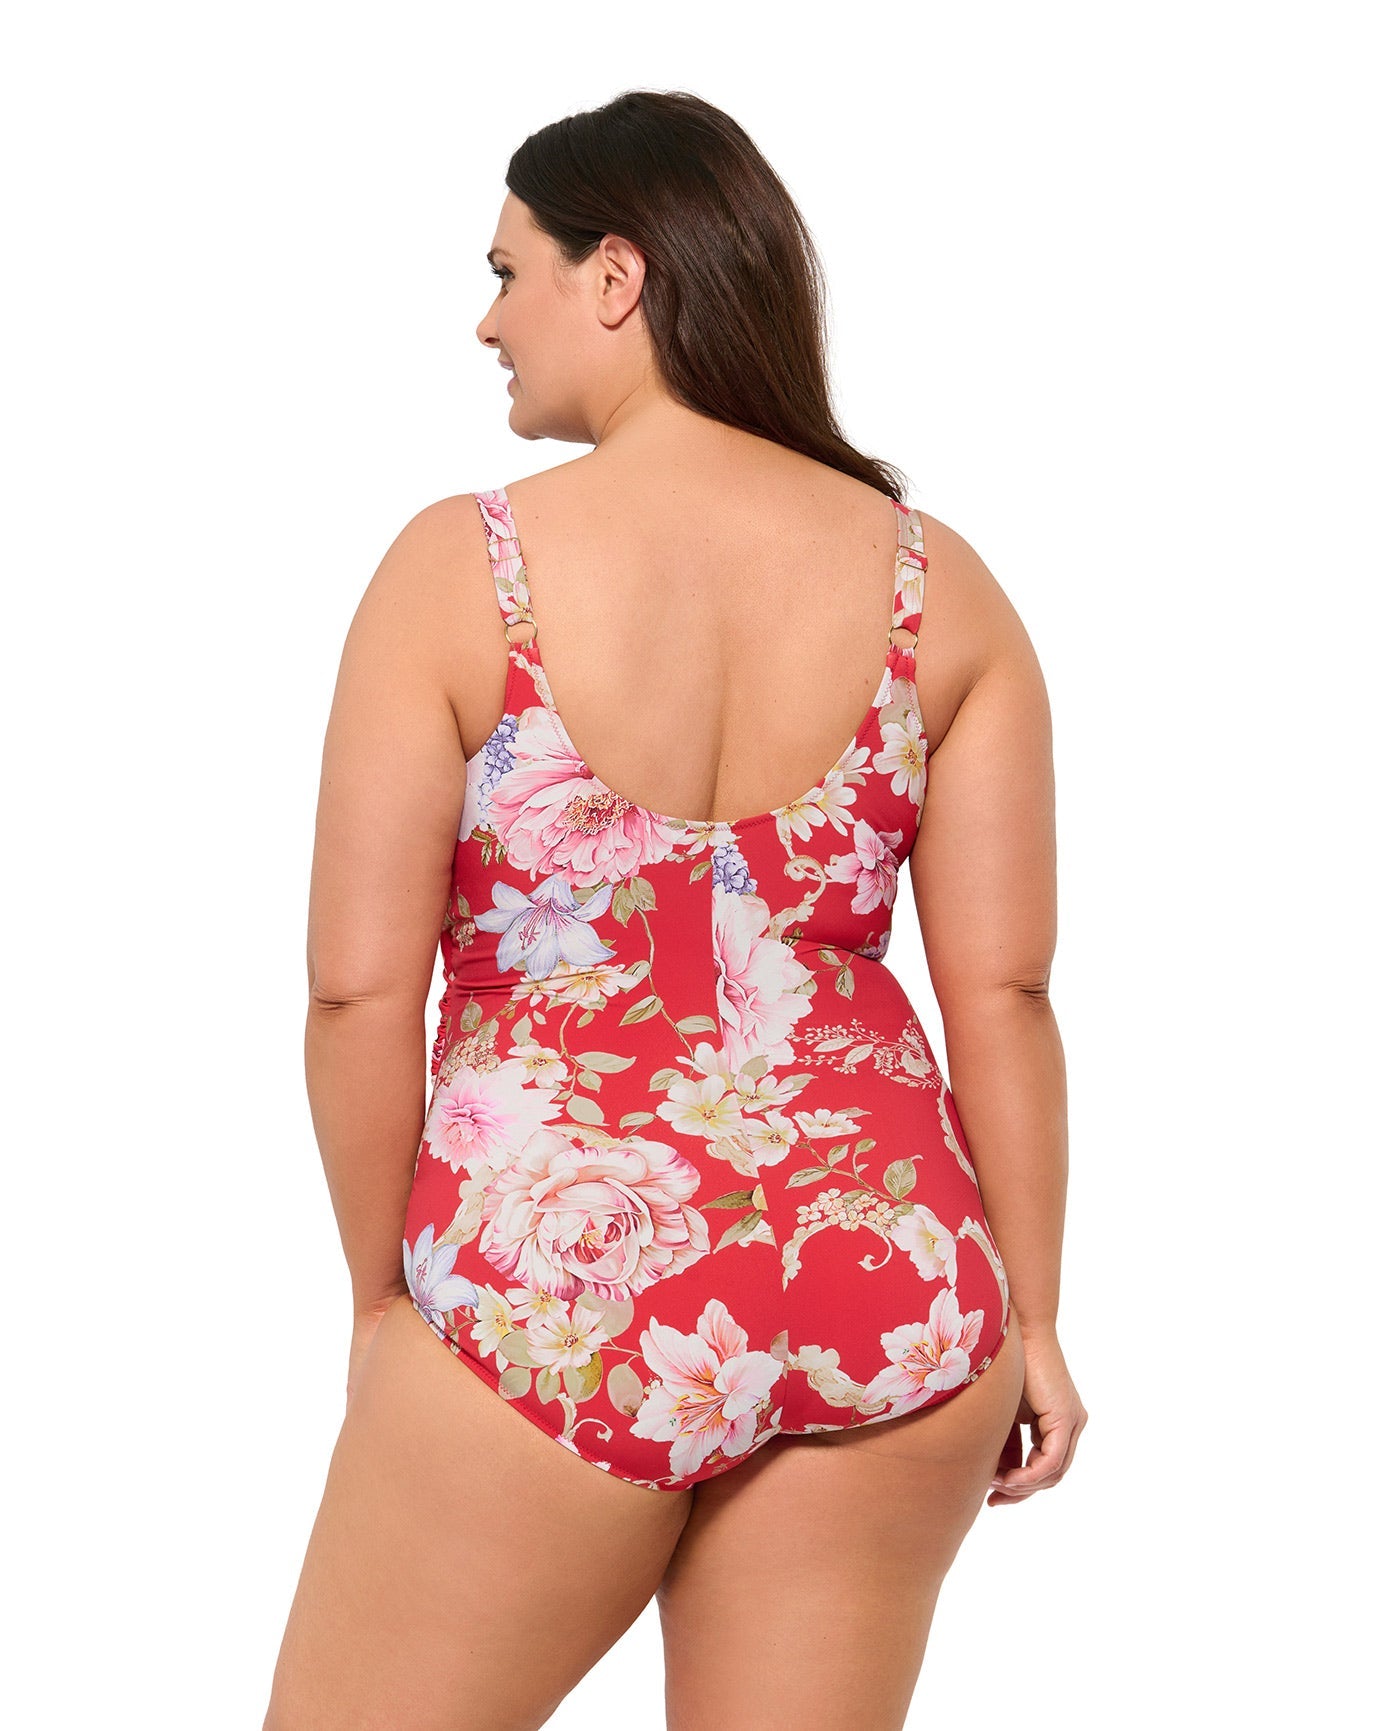 Back View Of Gottex Hitachi Plus Size Surplice V-Neck Swimsuit | Gottex Hitachi Red